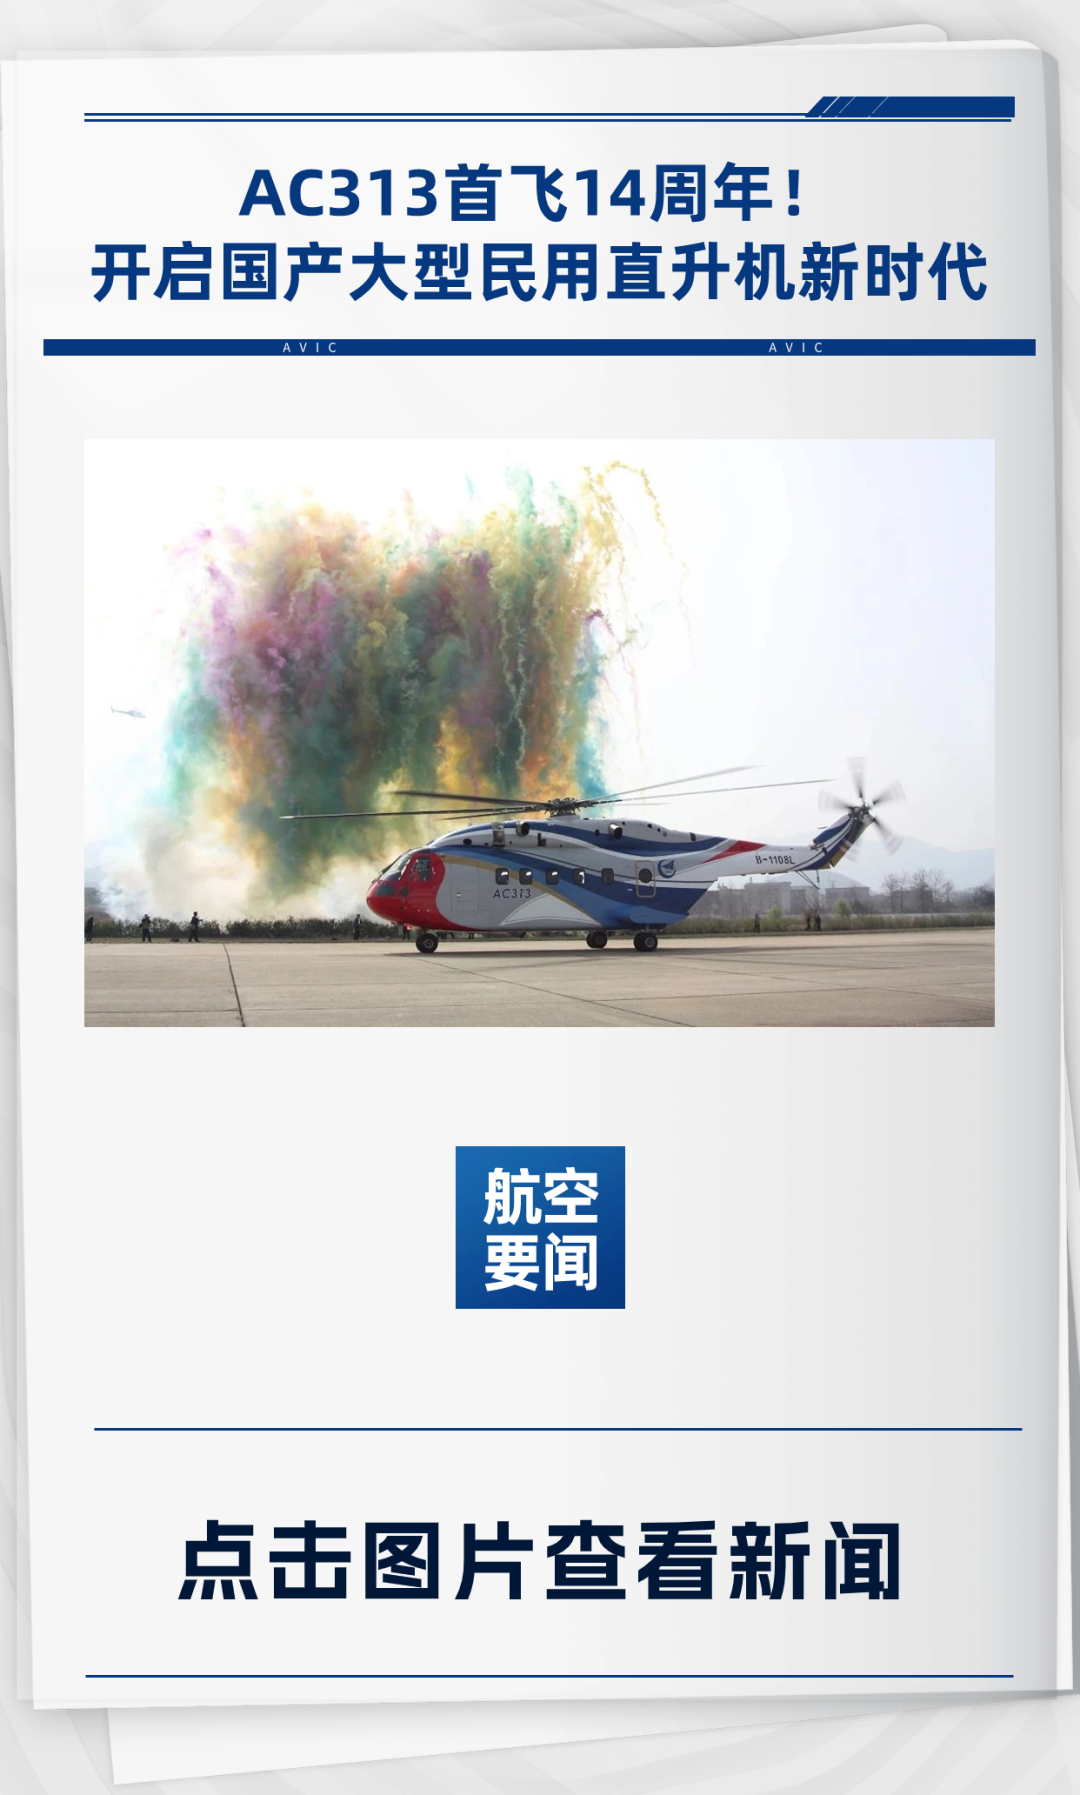 AC313首飞14周年！开启国产大型民用直升机新时代